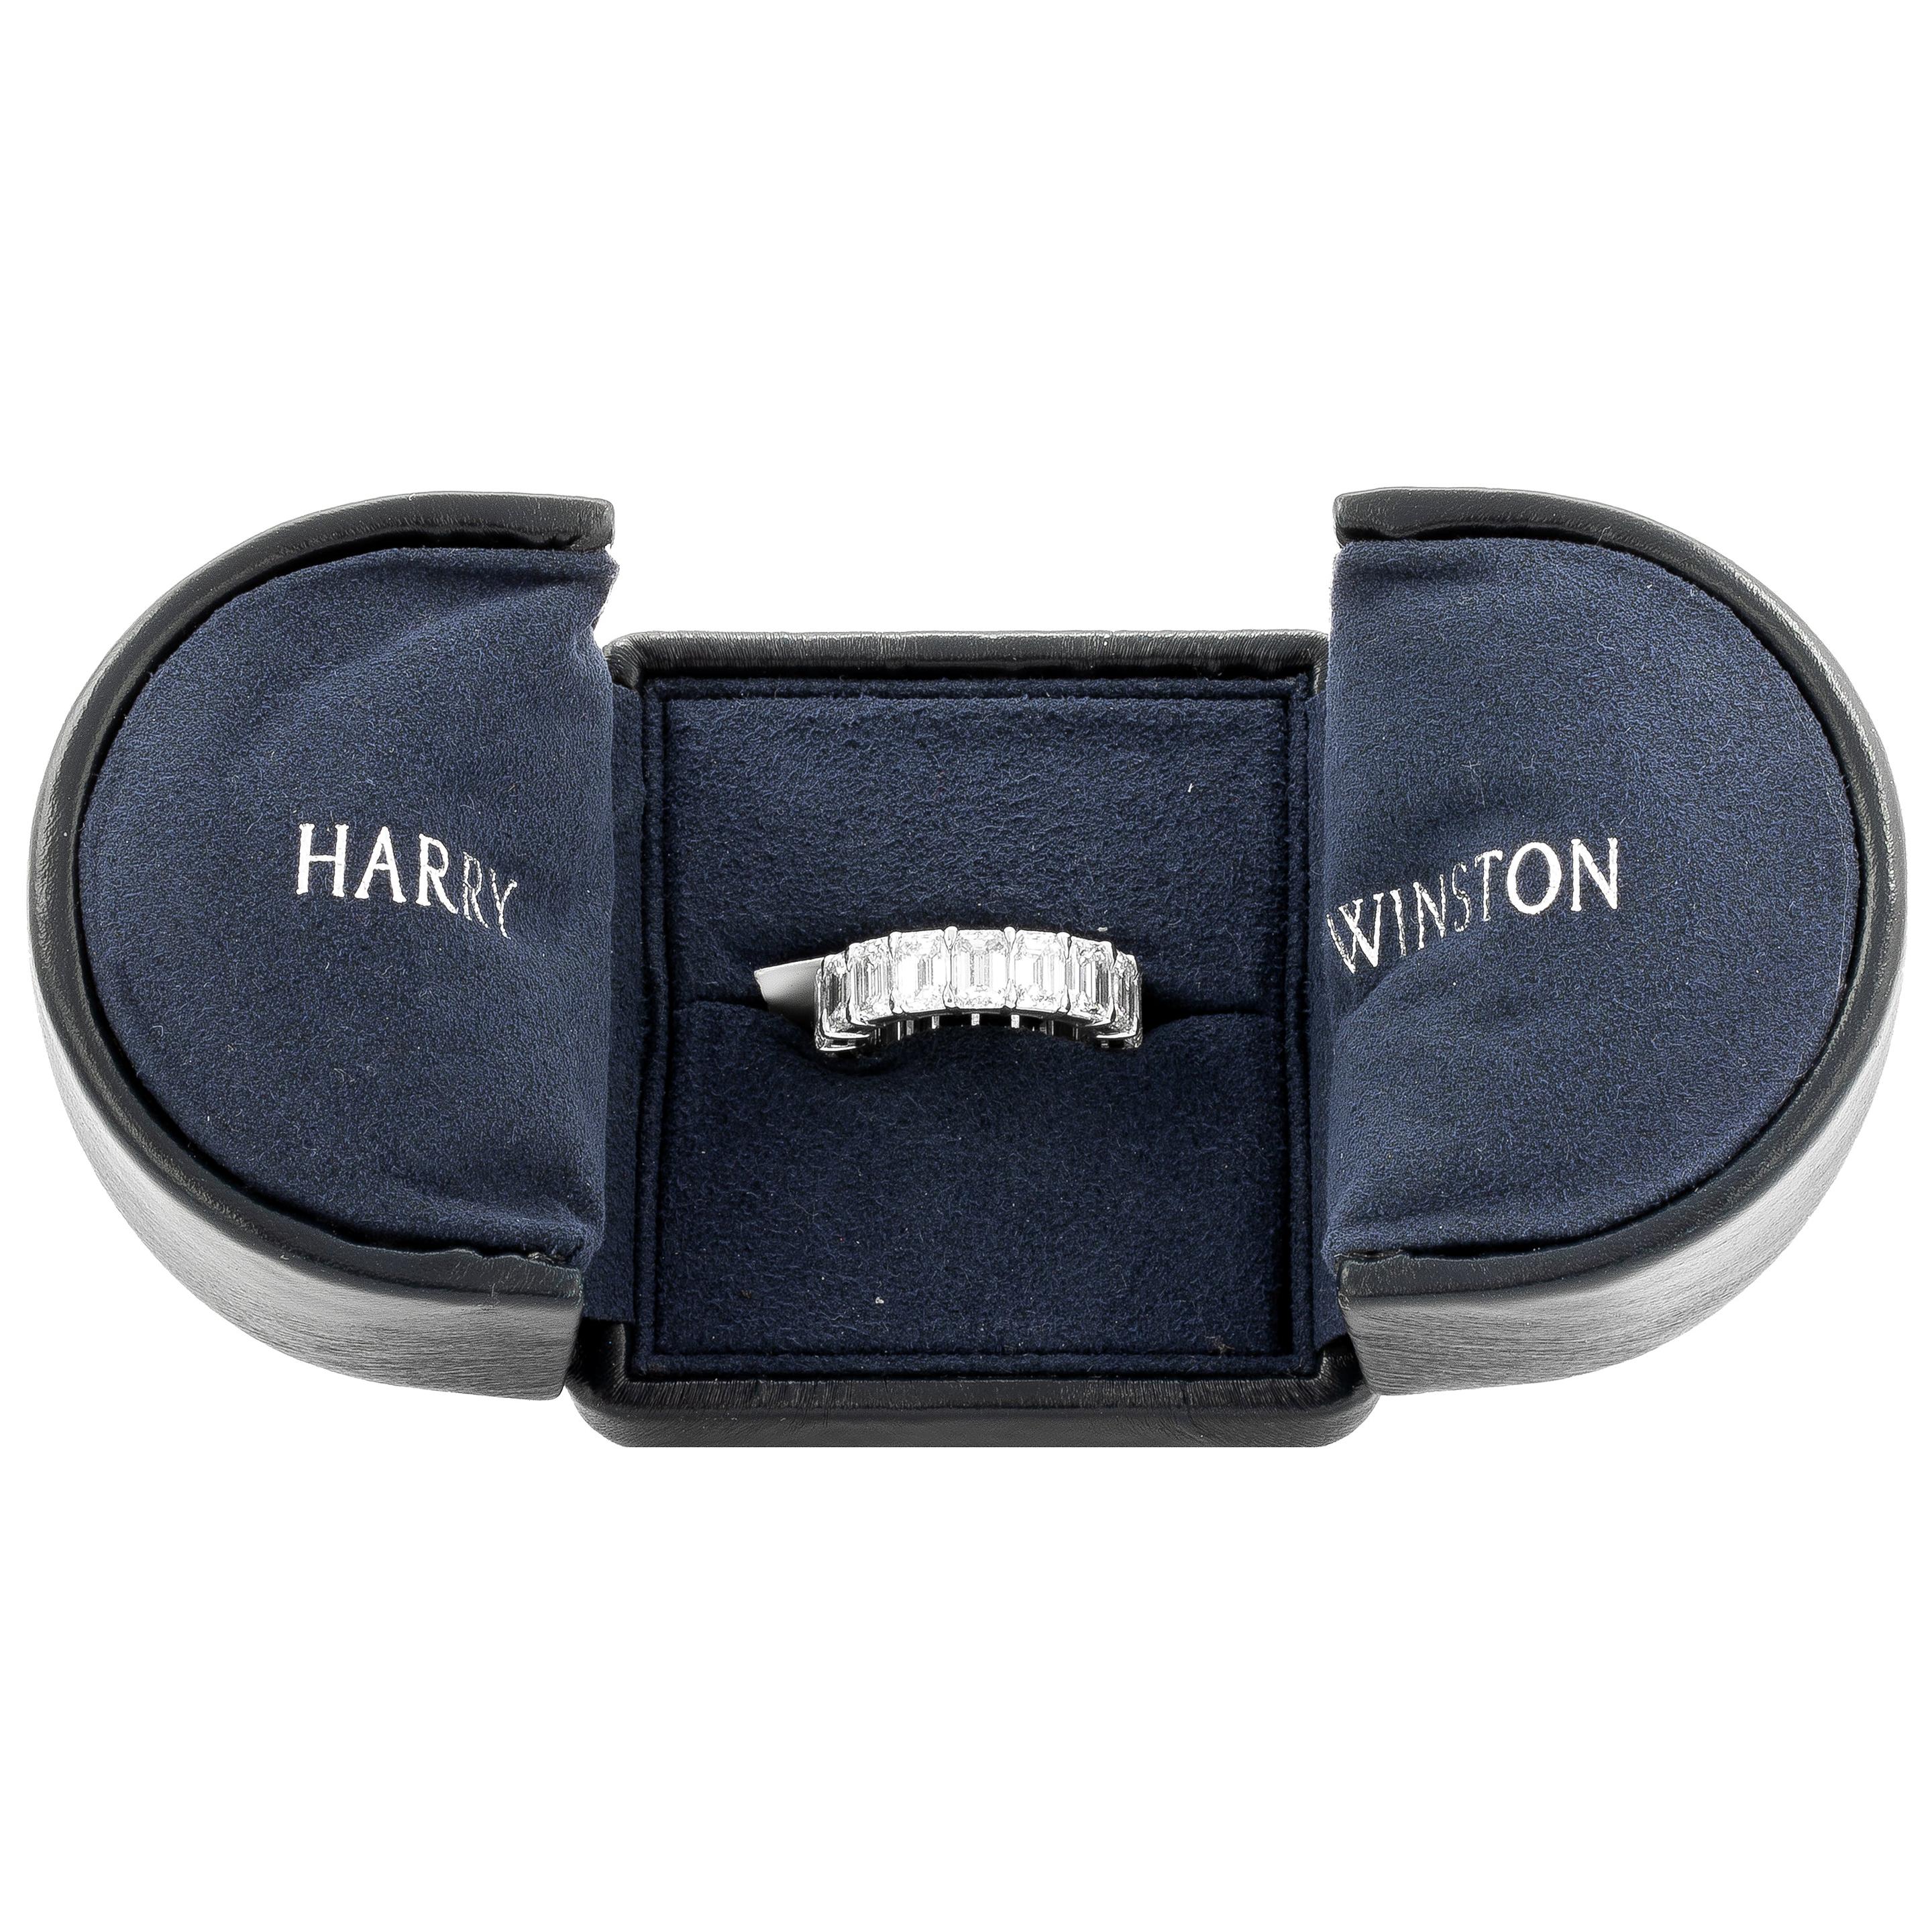 Harry Winston 10.36 Carat Diamond Eternity Band Platinum Ring Wedding Band